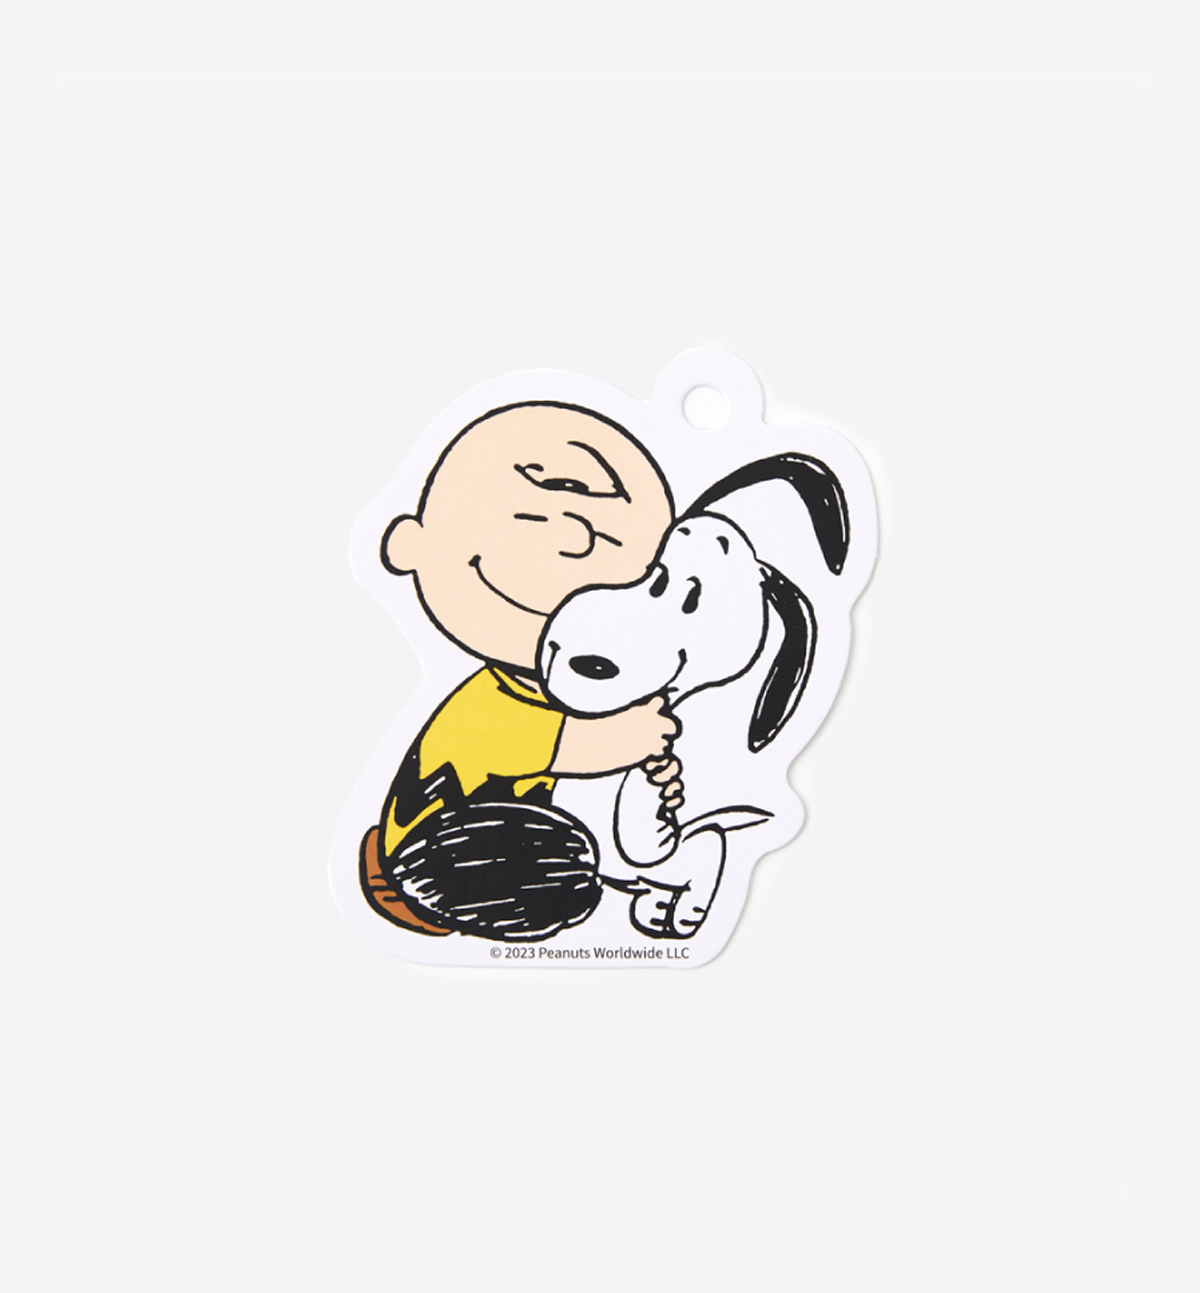 Peanuts Face Cushion [Snoopy's House]